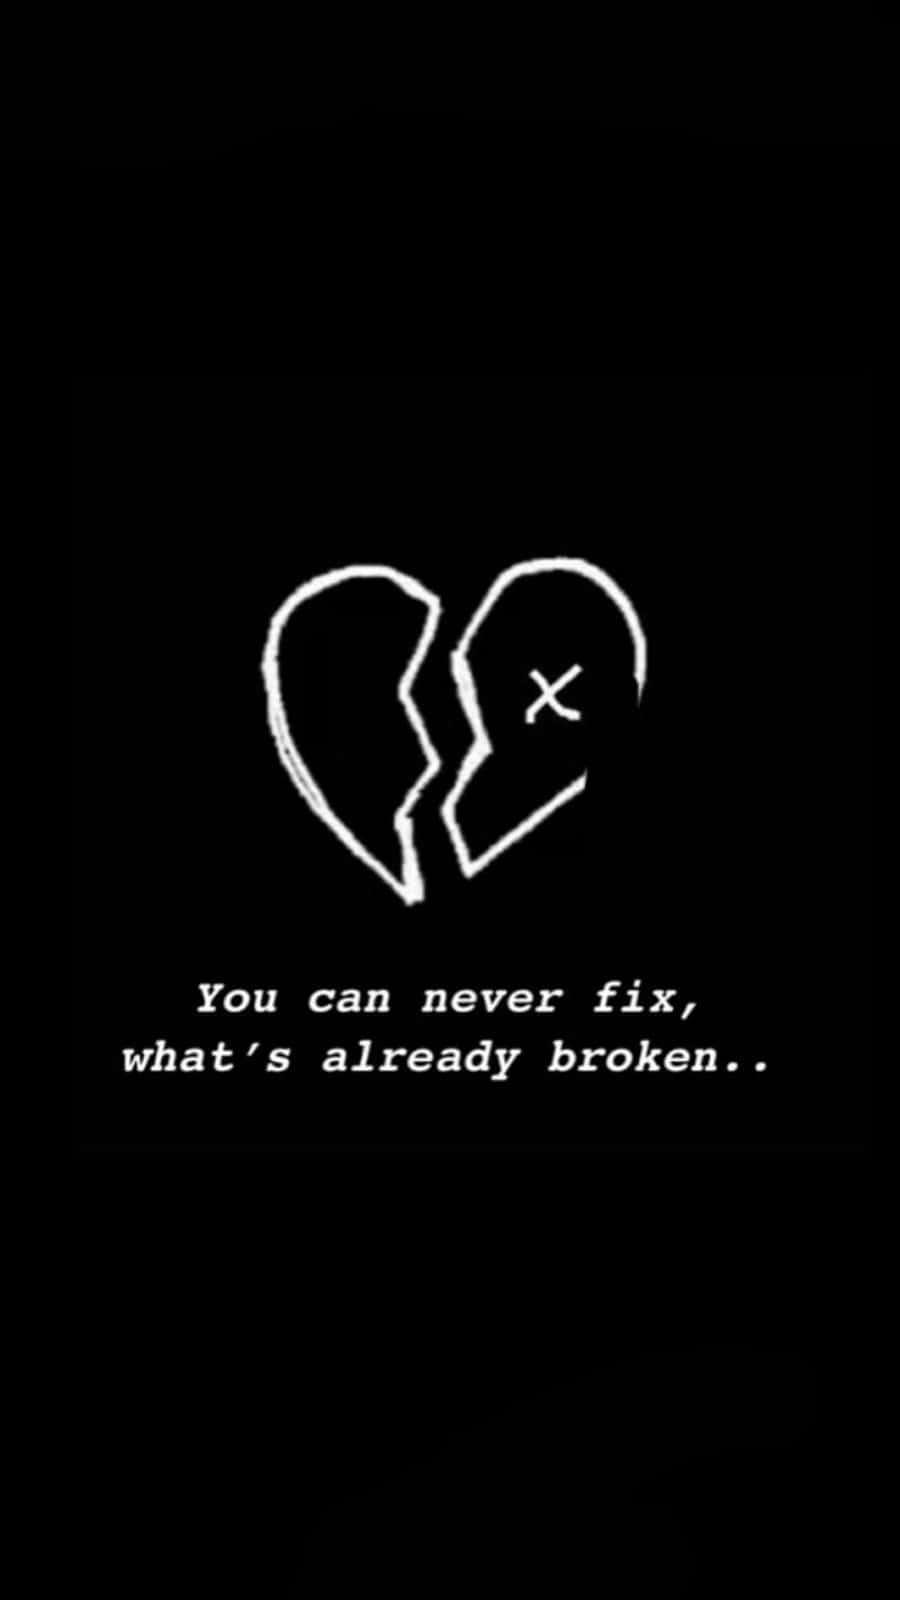 Heart broken feels. Broken Heart aesthetic. Обои на телефон разбитое сердце на чёрном. Broken Heart. Broken Heart Wallpaper Phone.